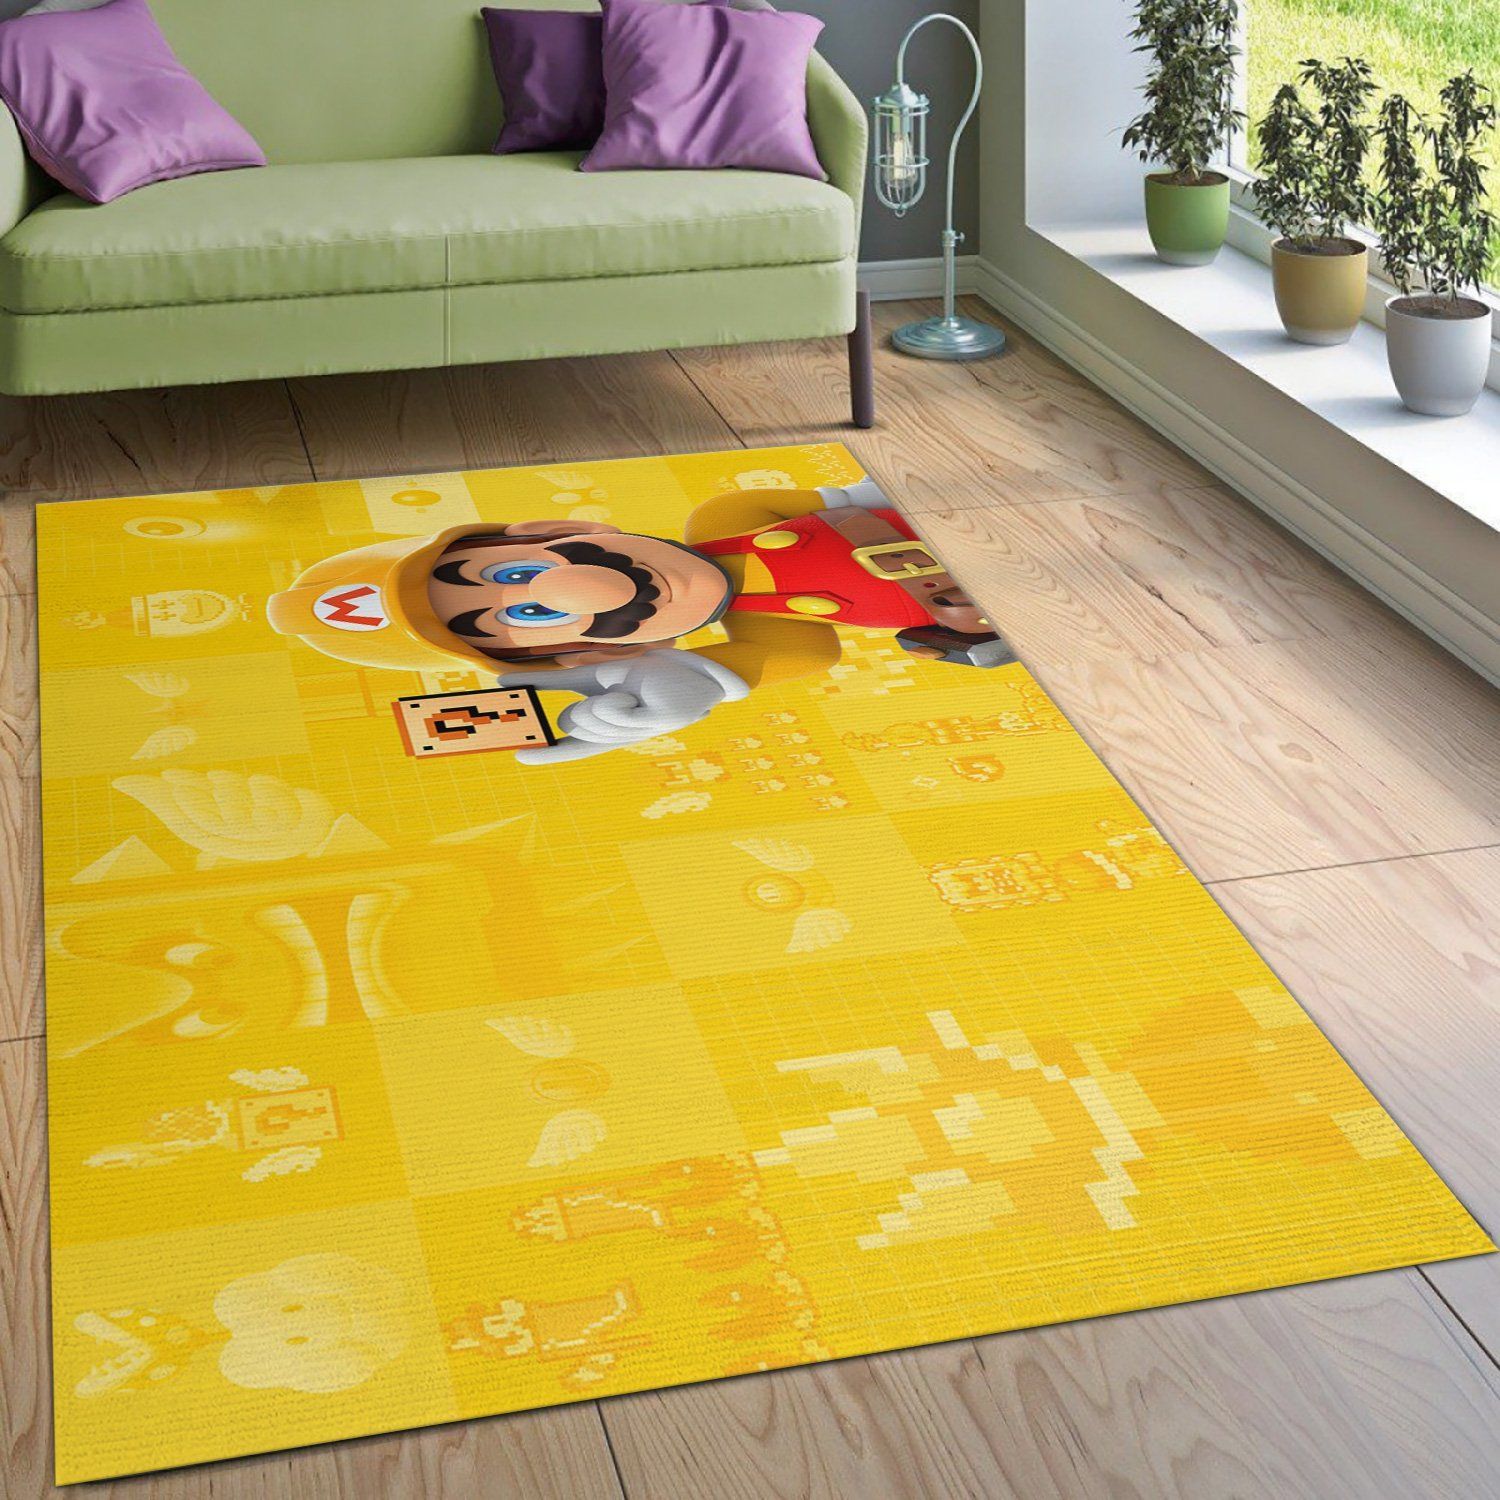 Mario Ver1 Rug Living Room Rug US Gift Decor - Indoor Outdoor Rugs 2